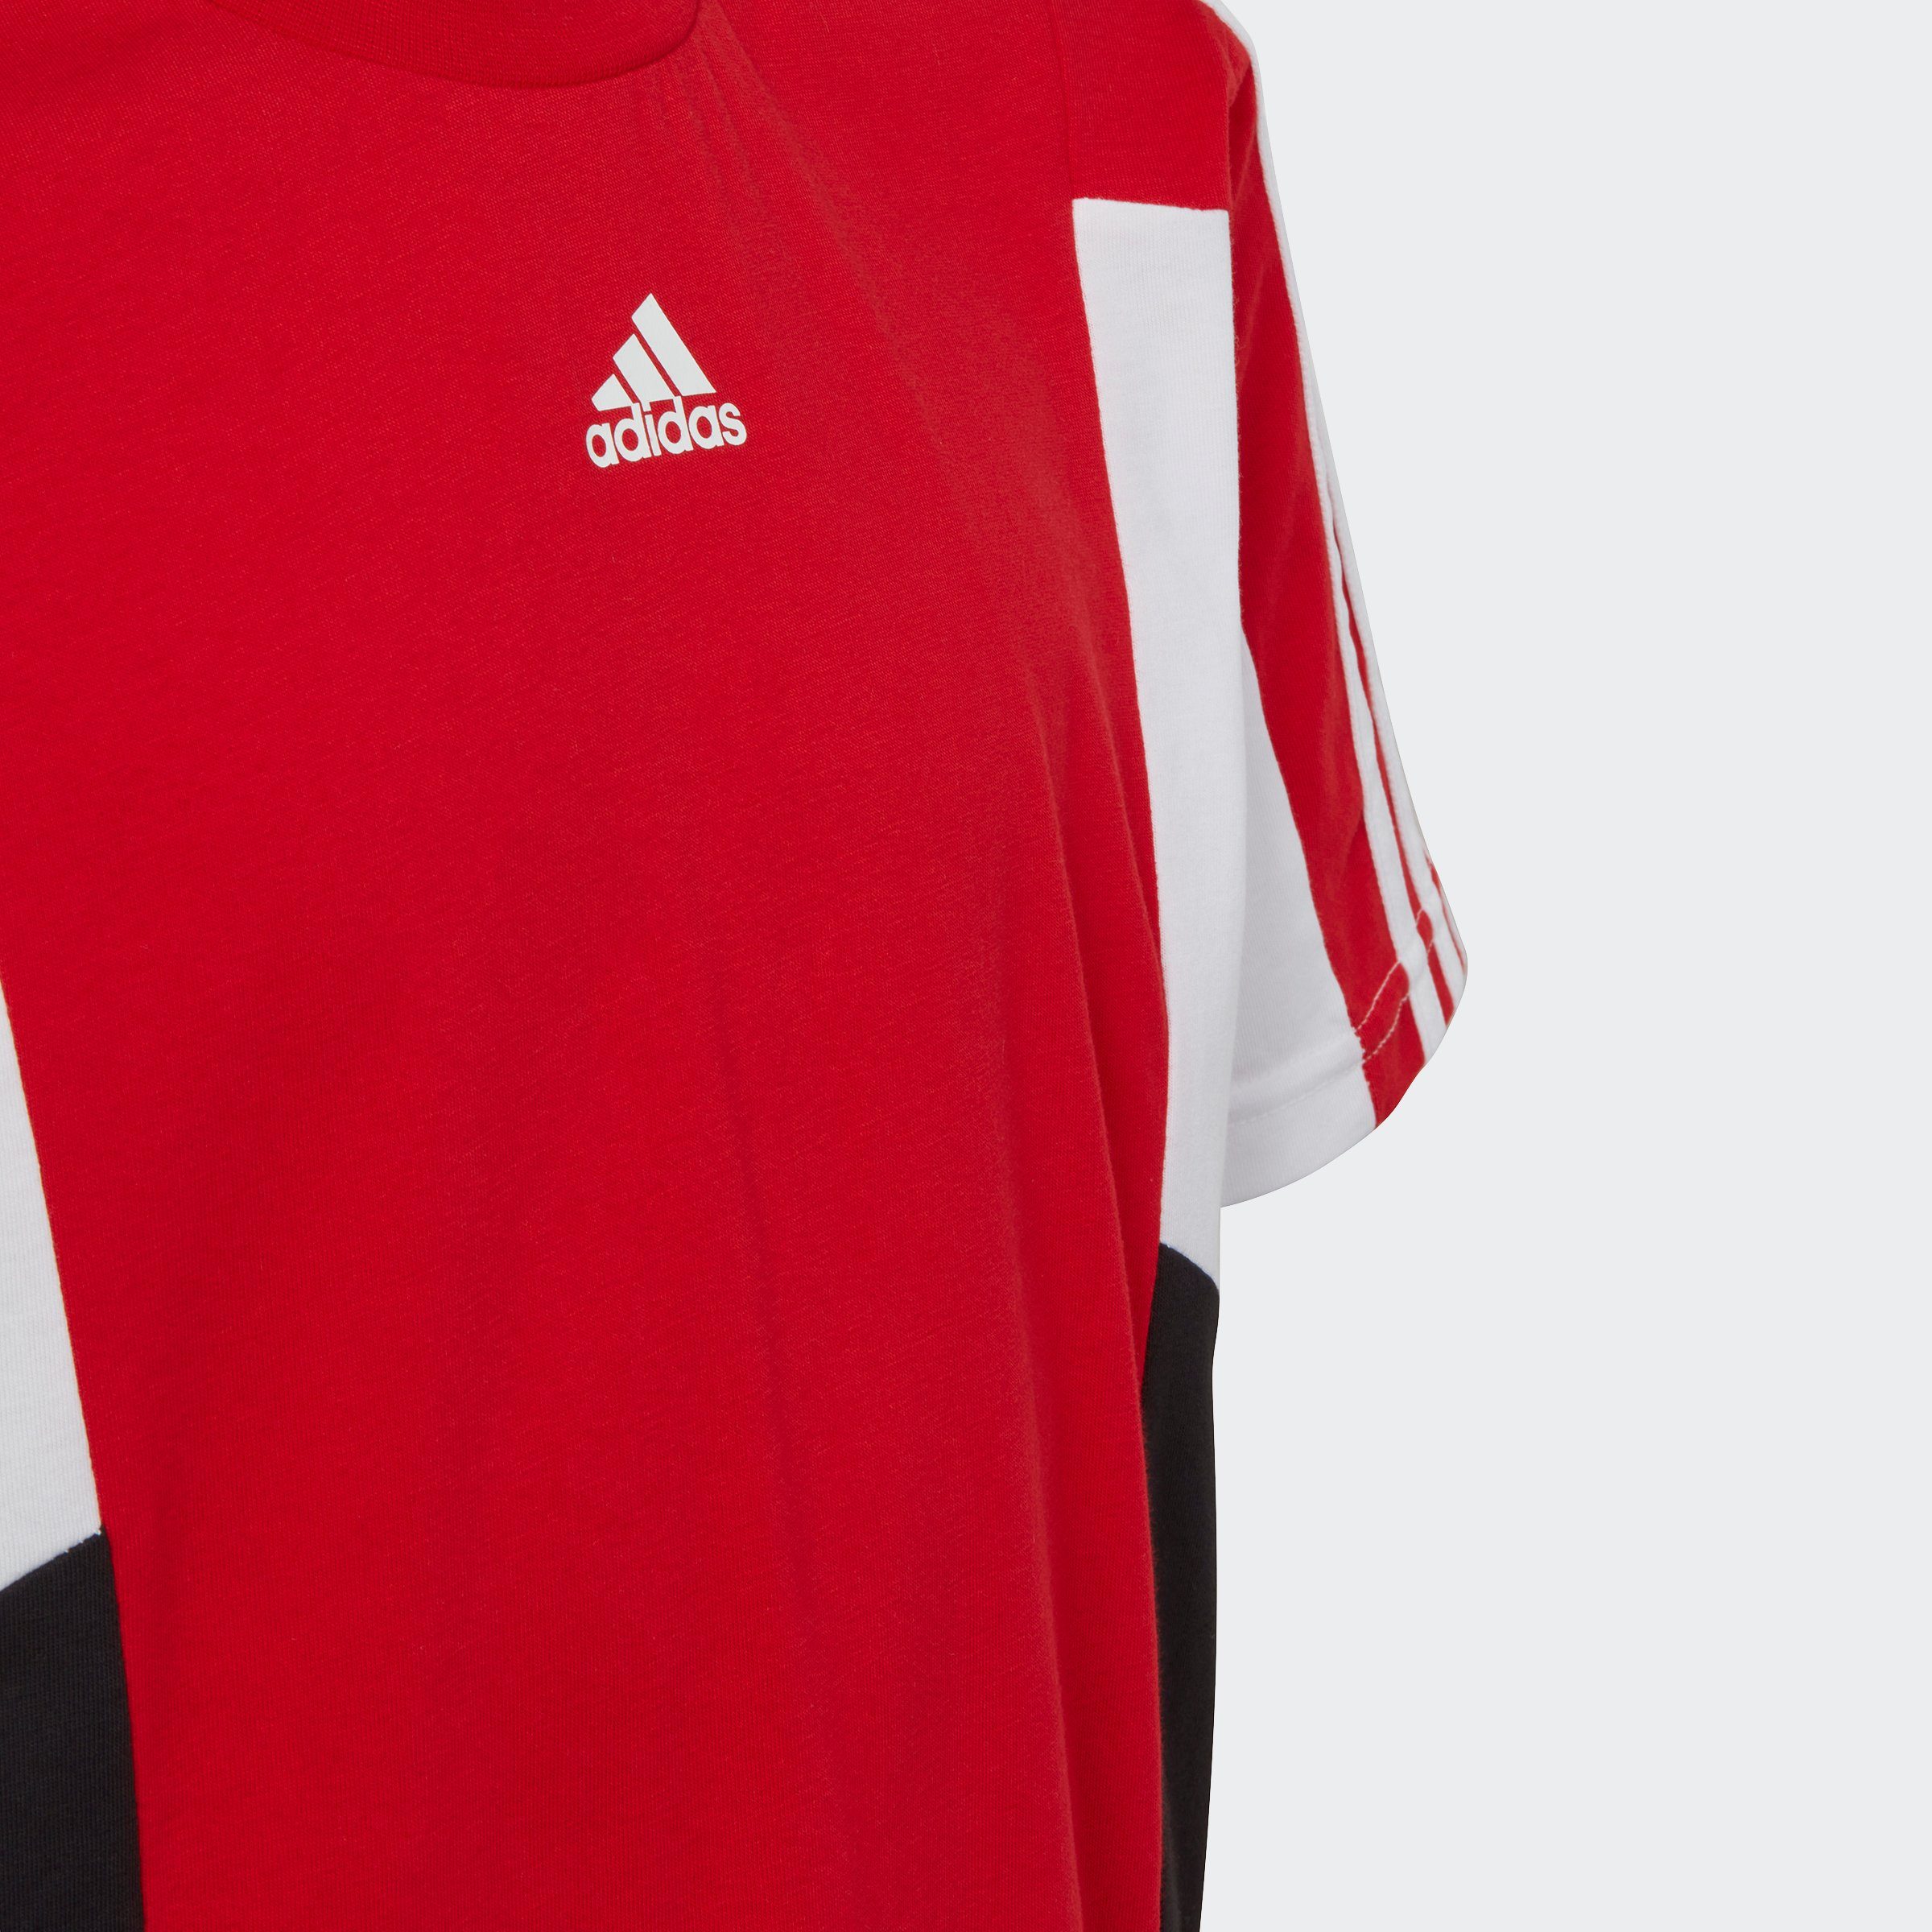 adidas Sportswear T-Shirt COLORBLOCK Scarlet FIT Black / White Better / REGULAR 3-STREIFEN